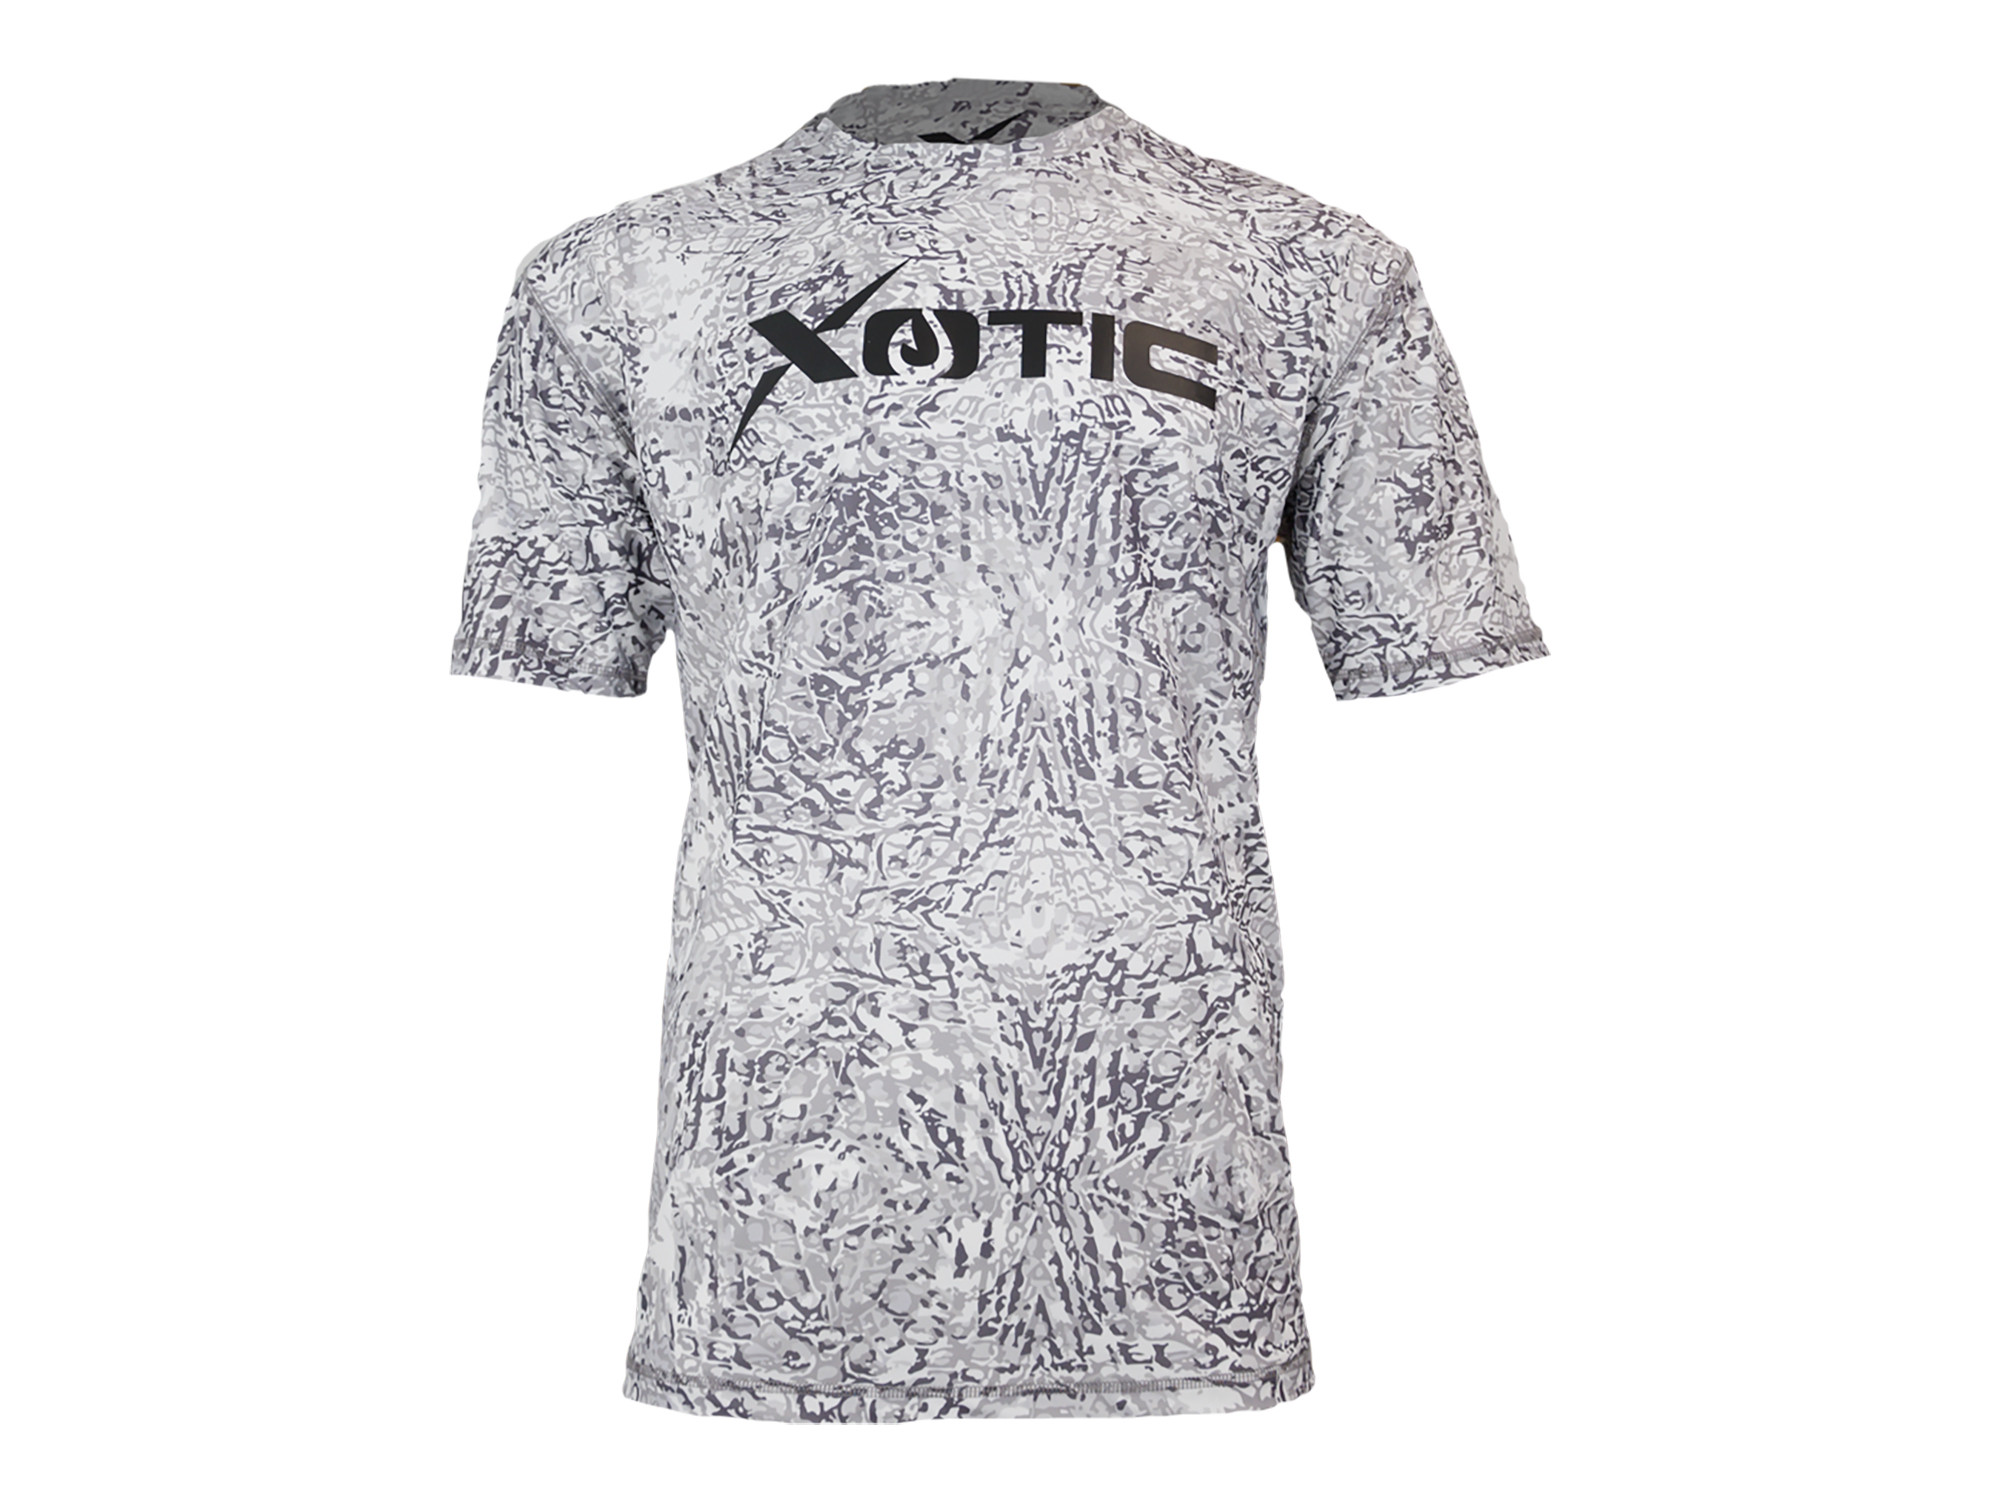 Xotic Camo and Fishing Gear Short Sleeve Performance Shirt